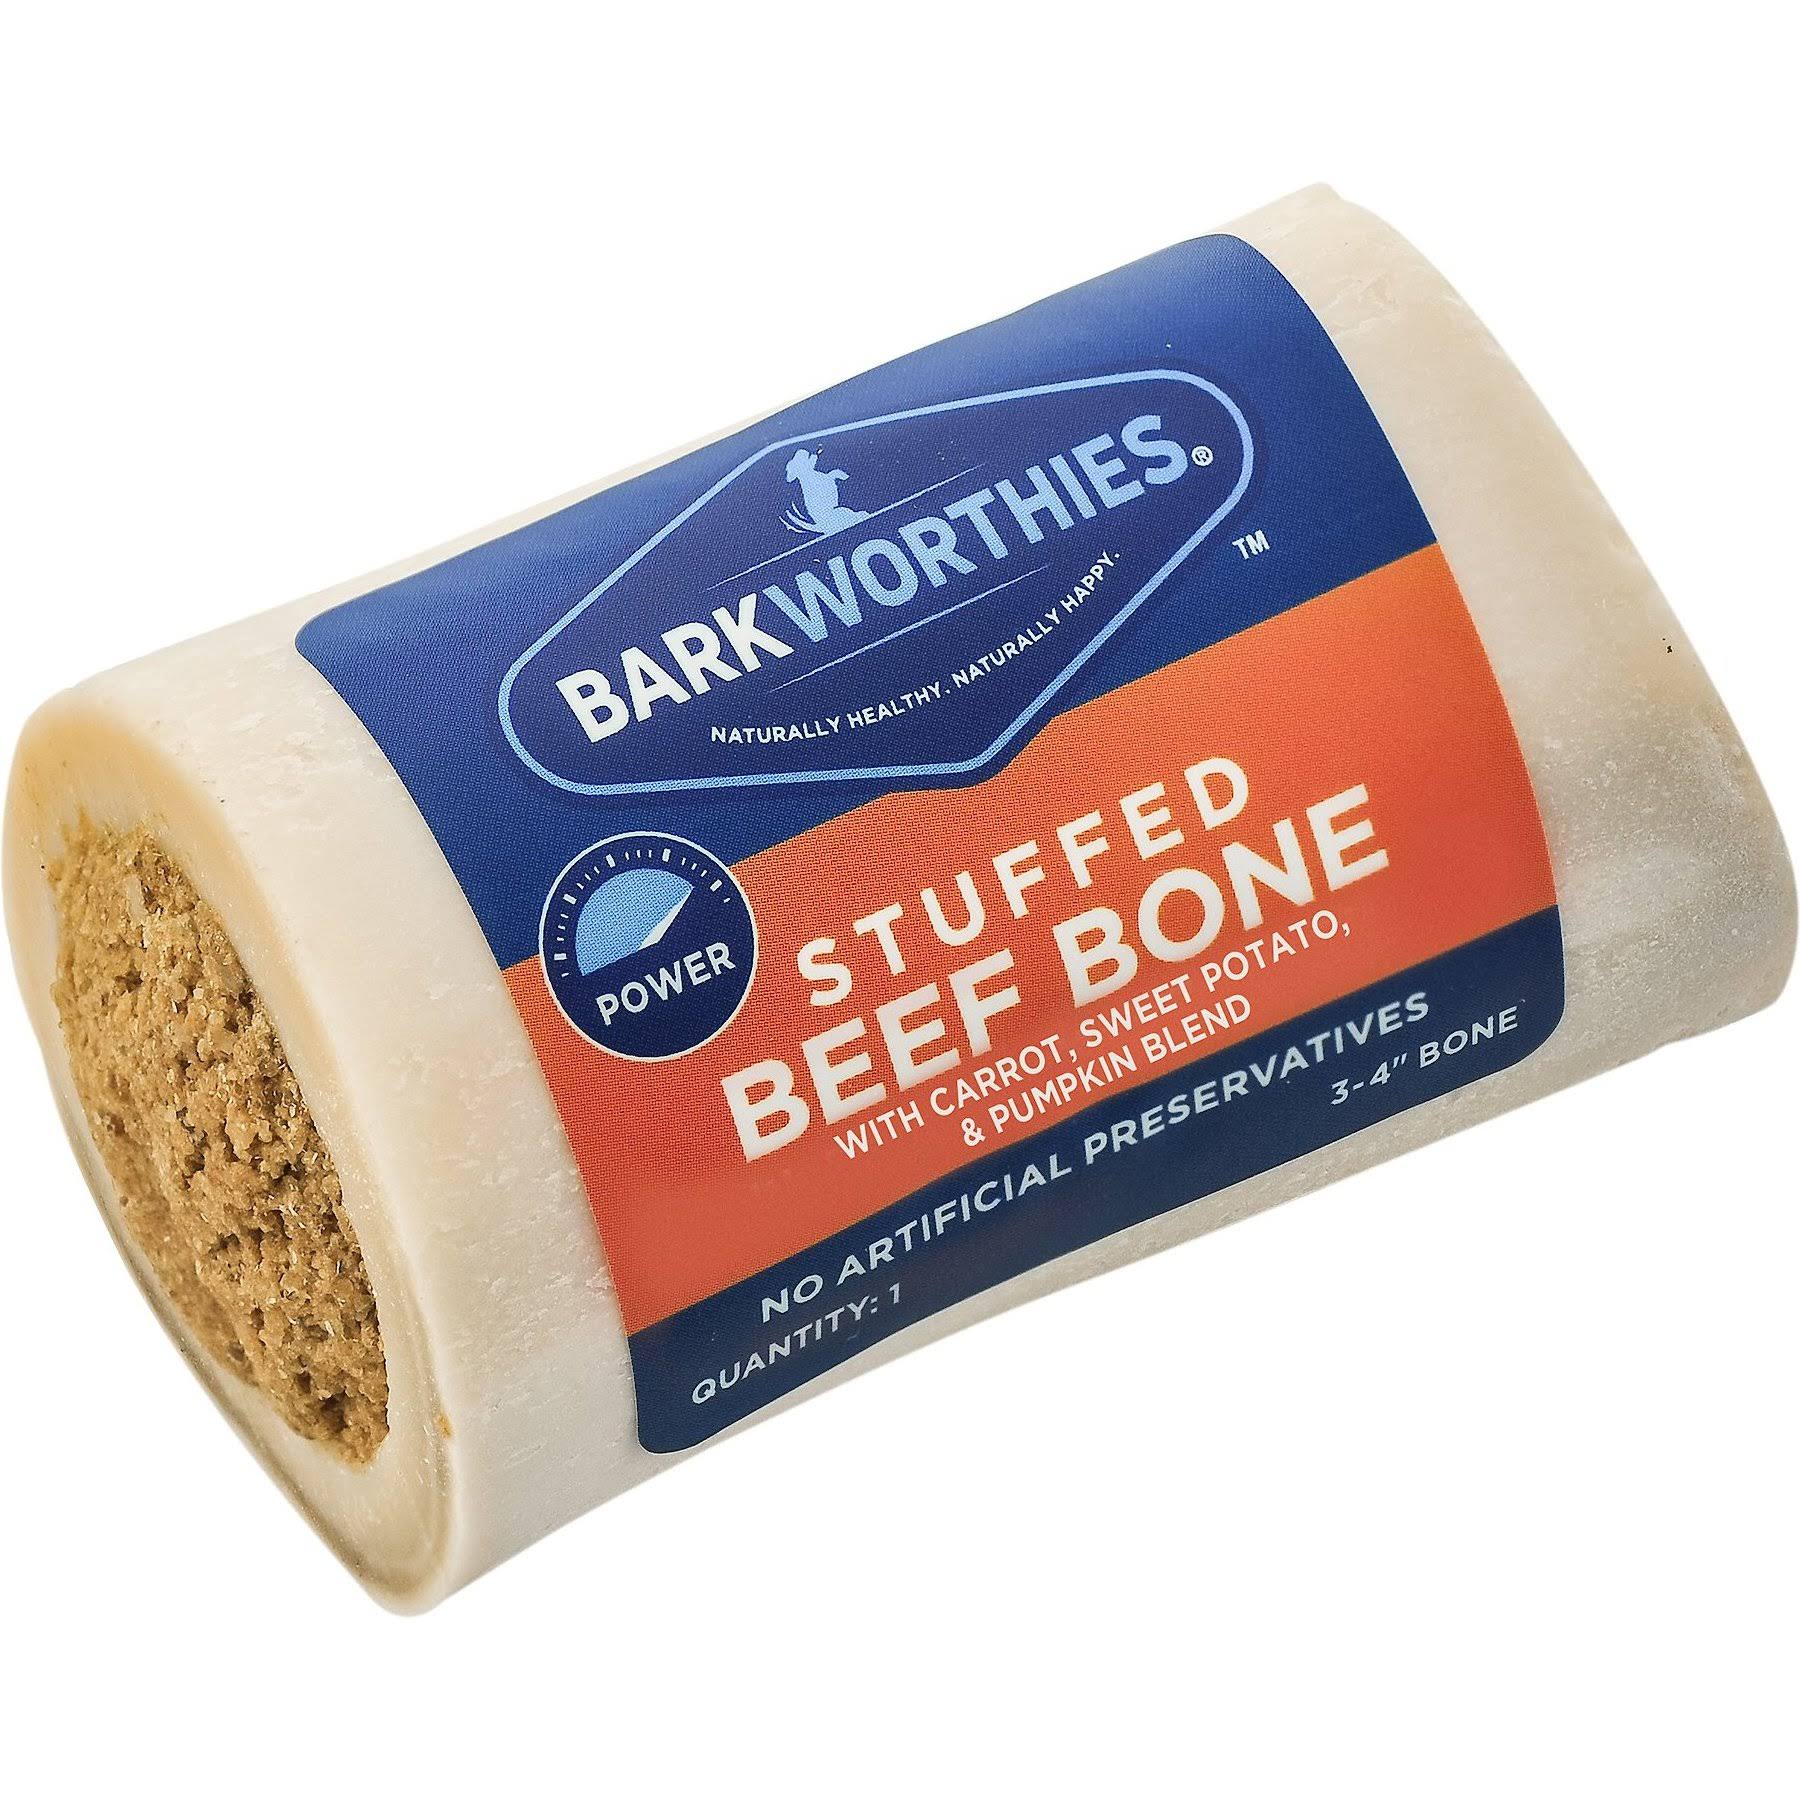 Barkworthies Stuffed Beef Shin Bone Dog Treat - Pumpkin, Sweet Potato, & Carrot - 3-4" Length